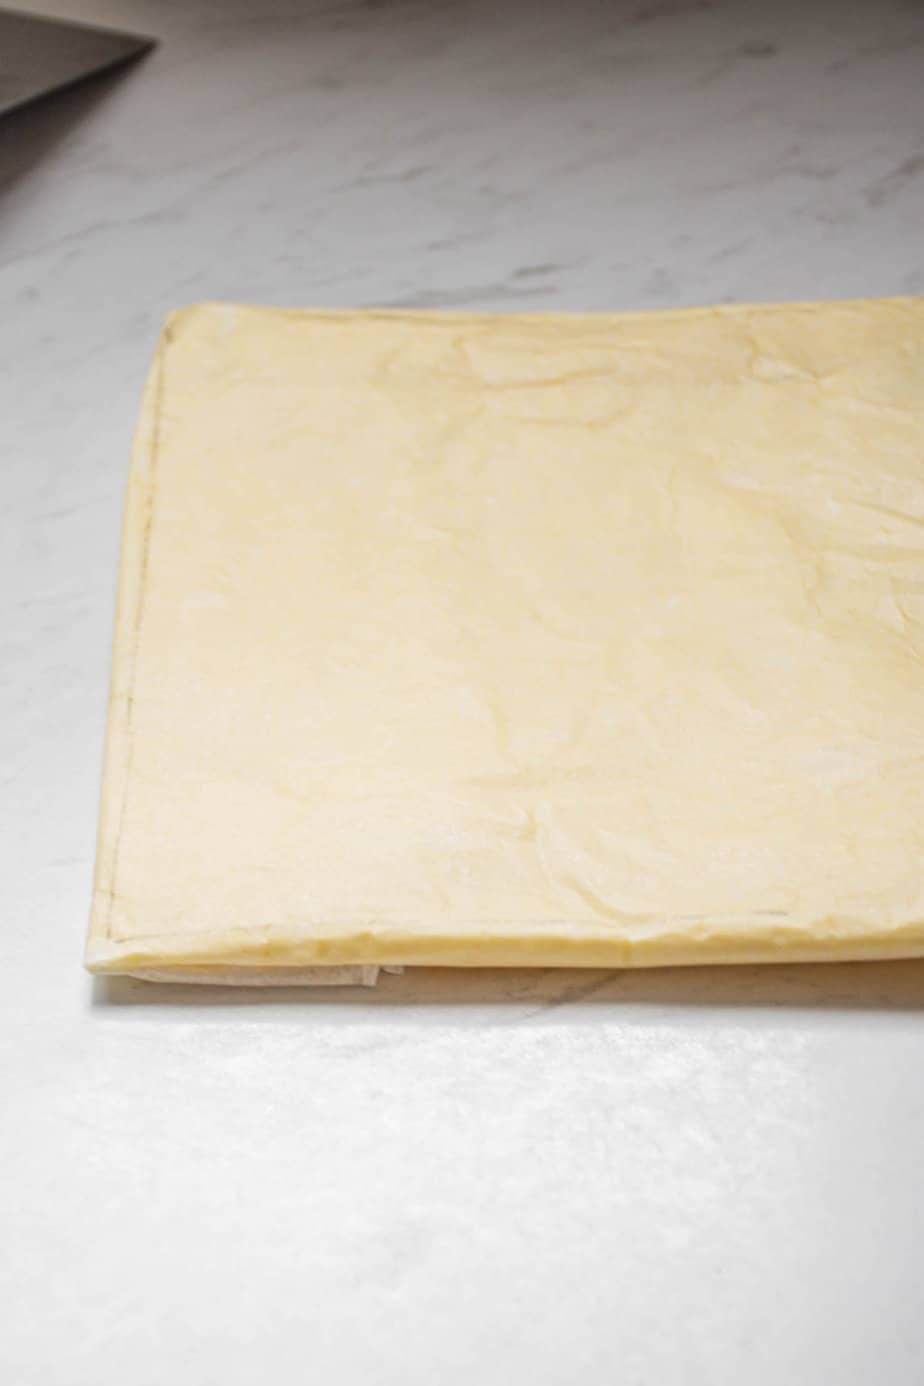 butter in baking paper.